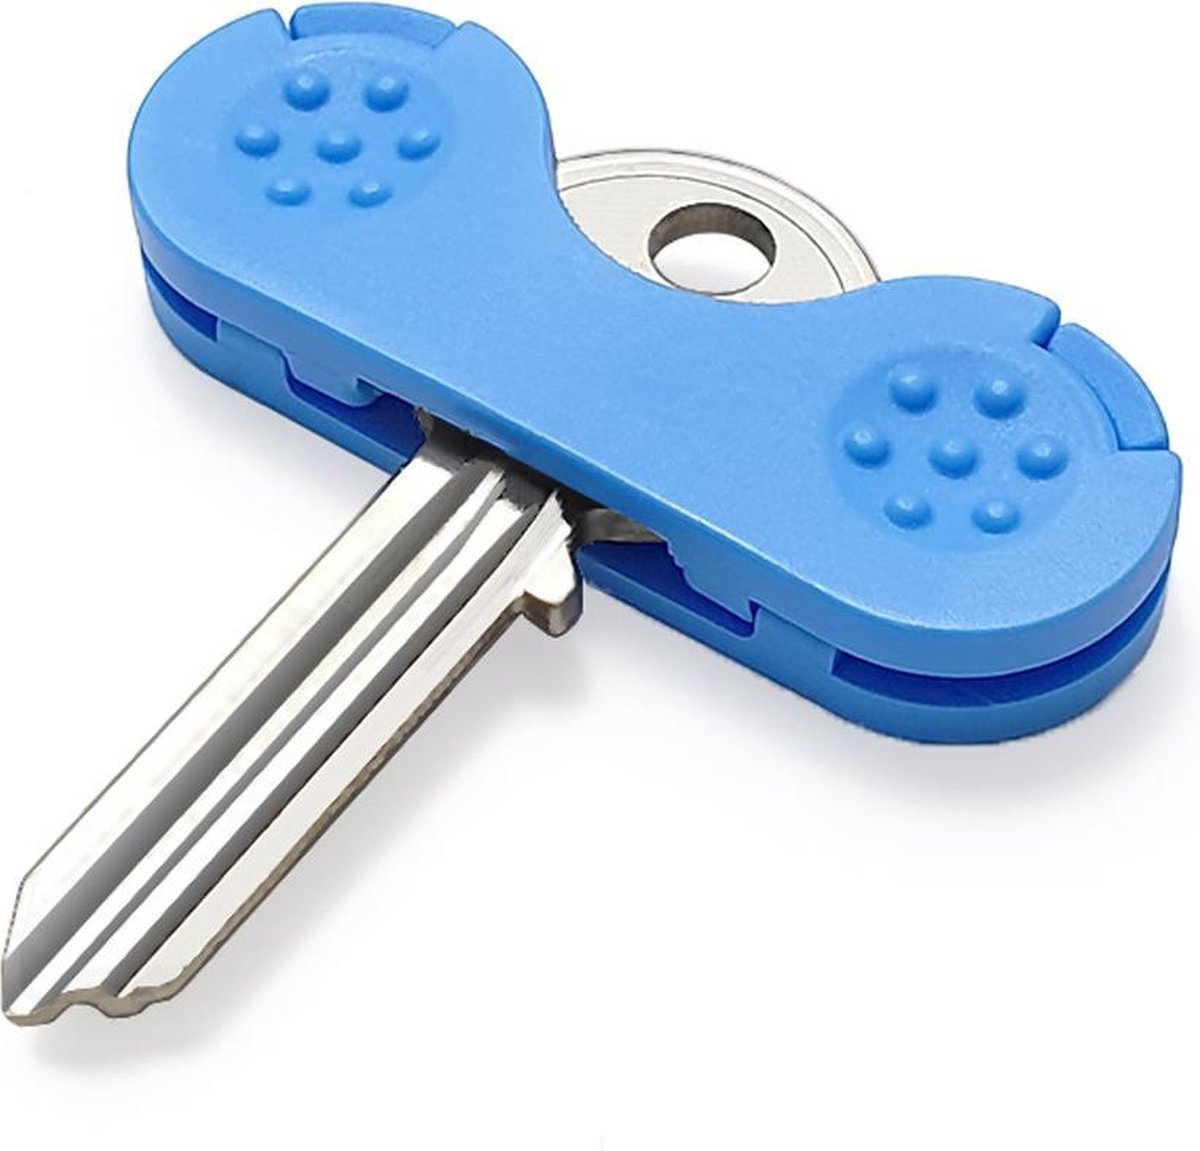 Keywing sleutelhulp: blauw